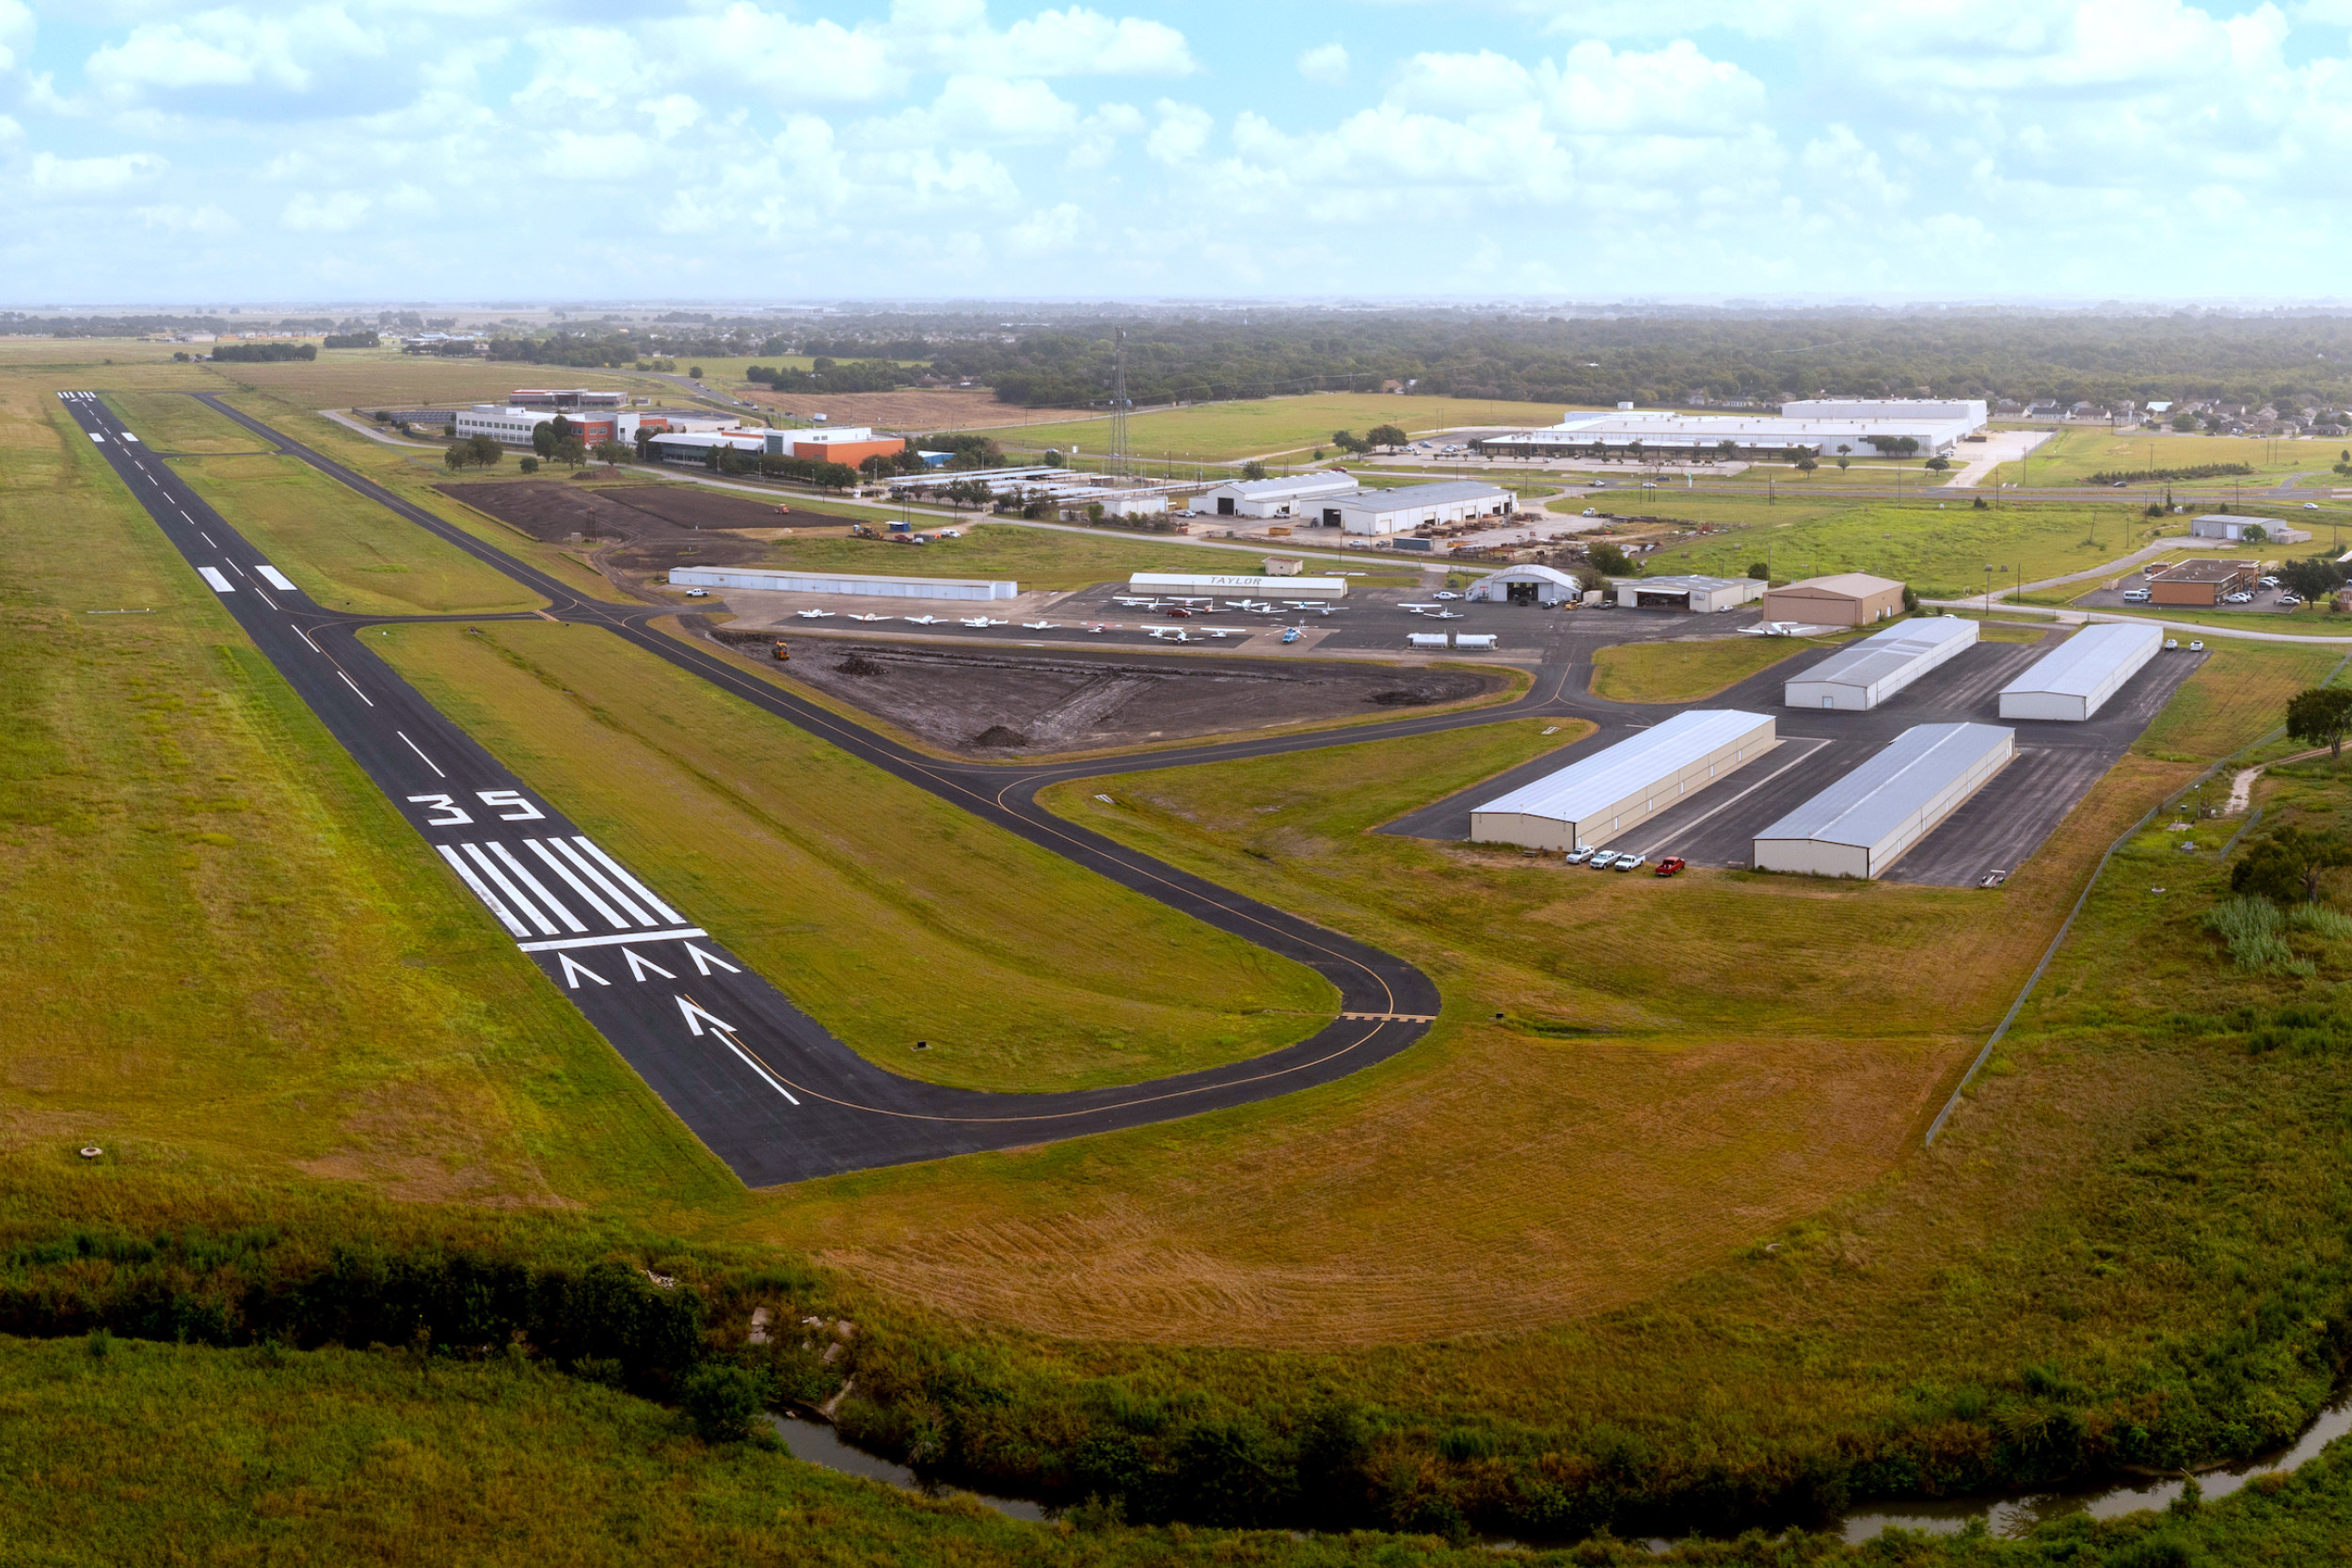 Aerial view of the landing air strip